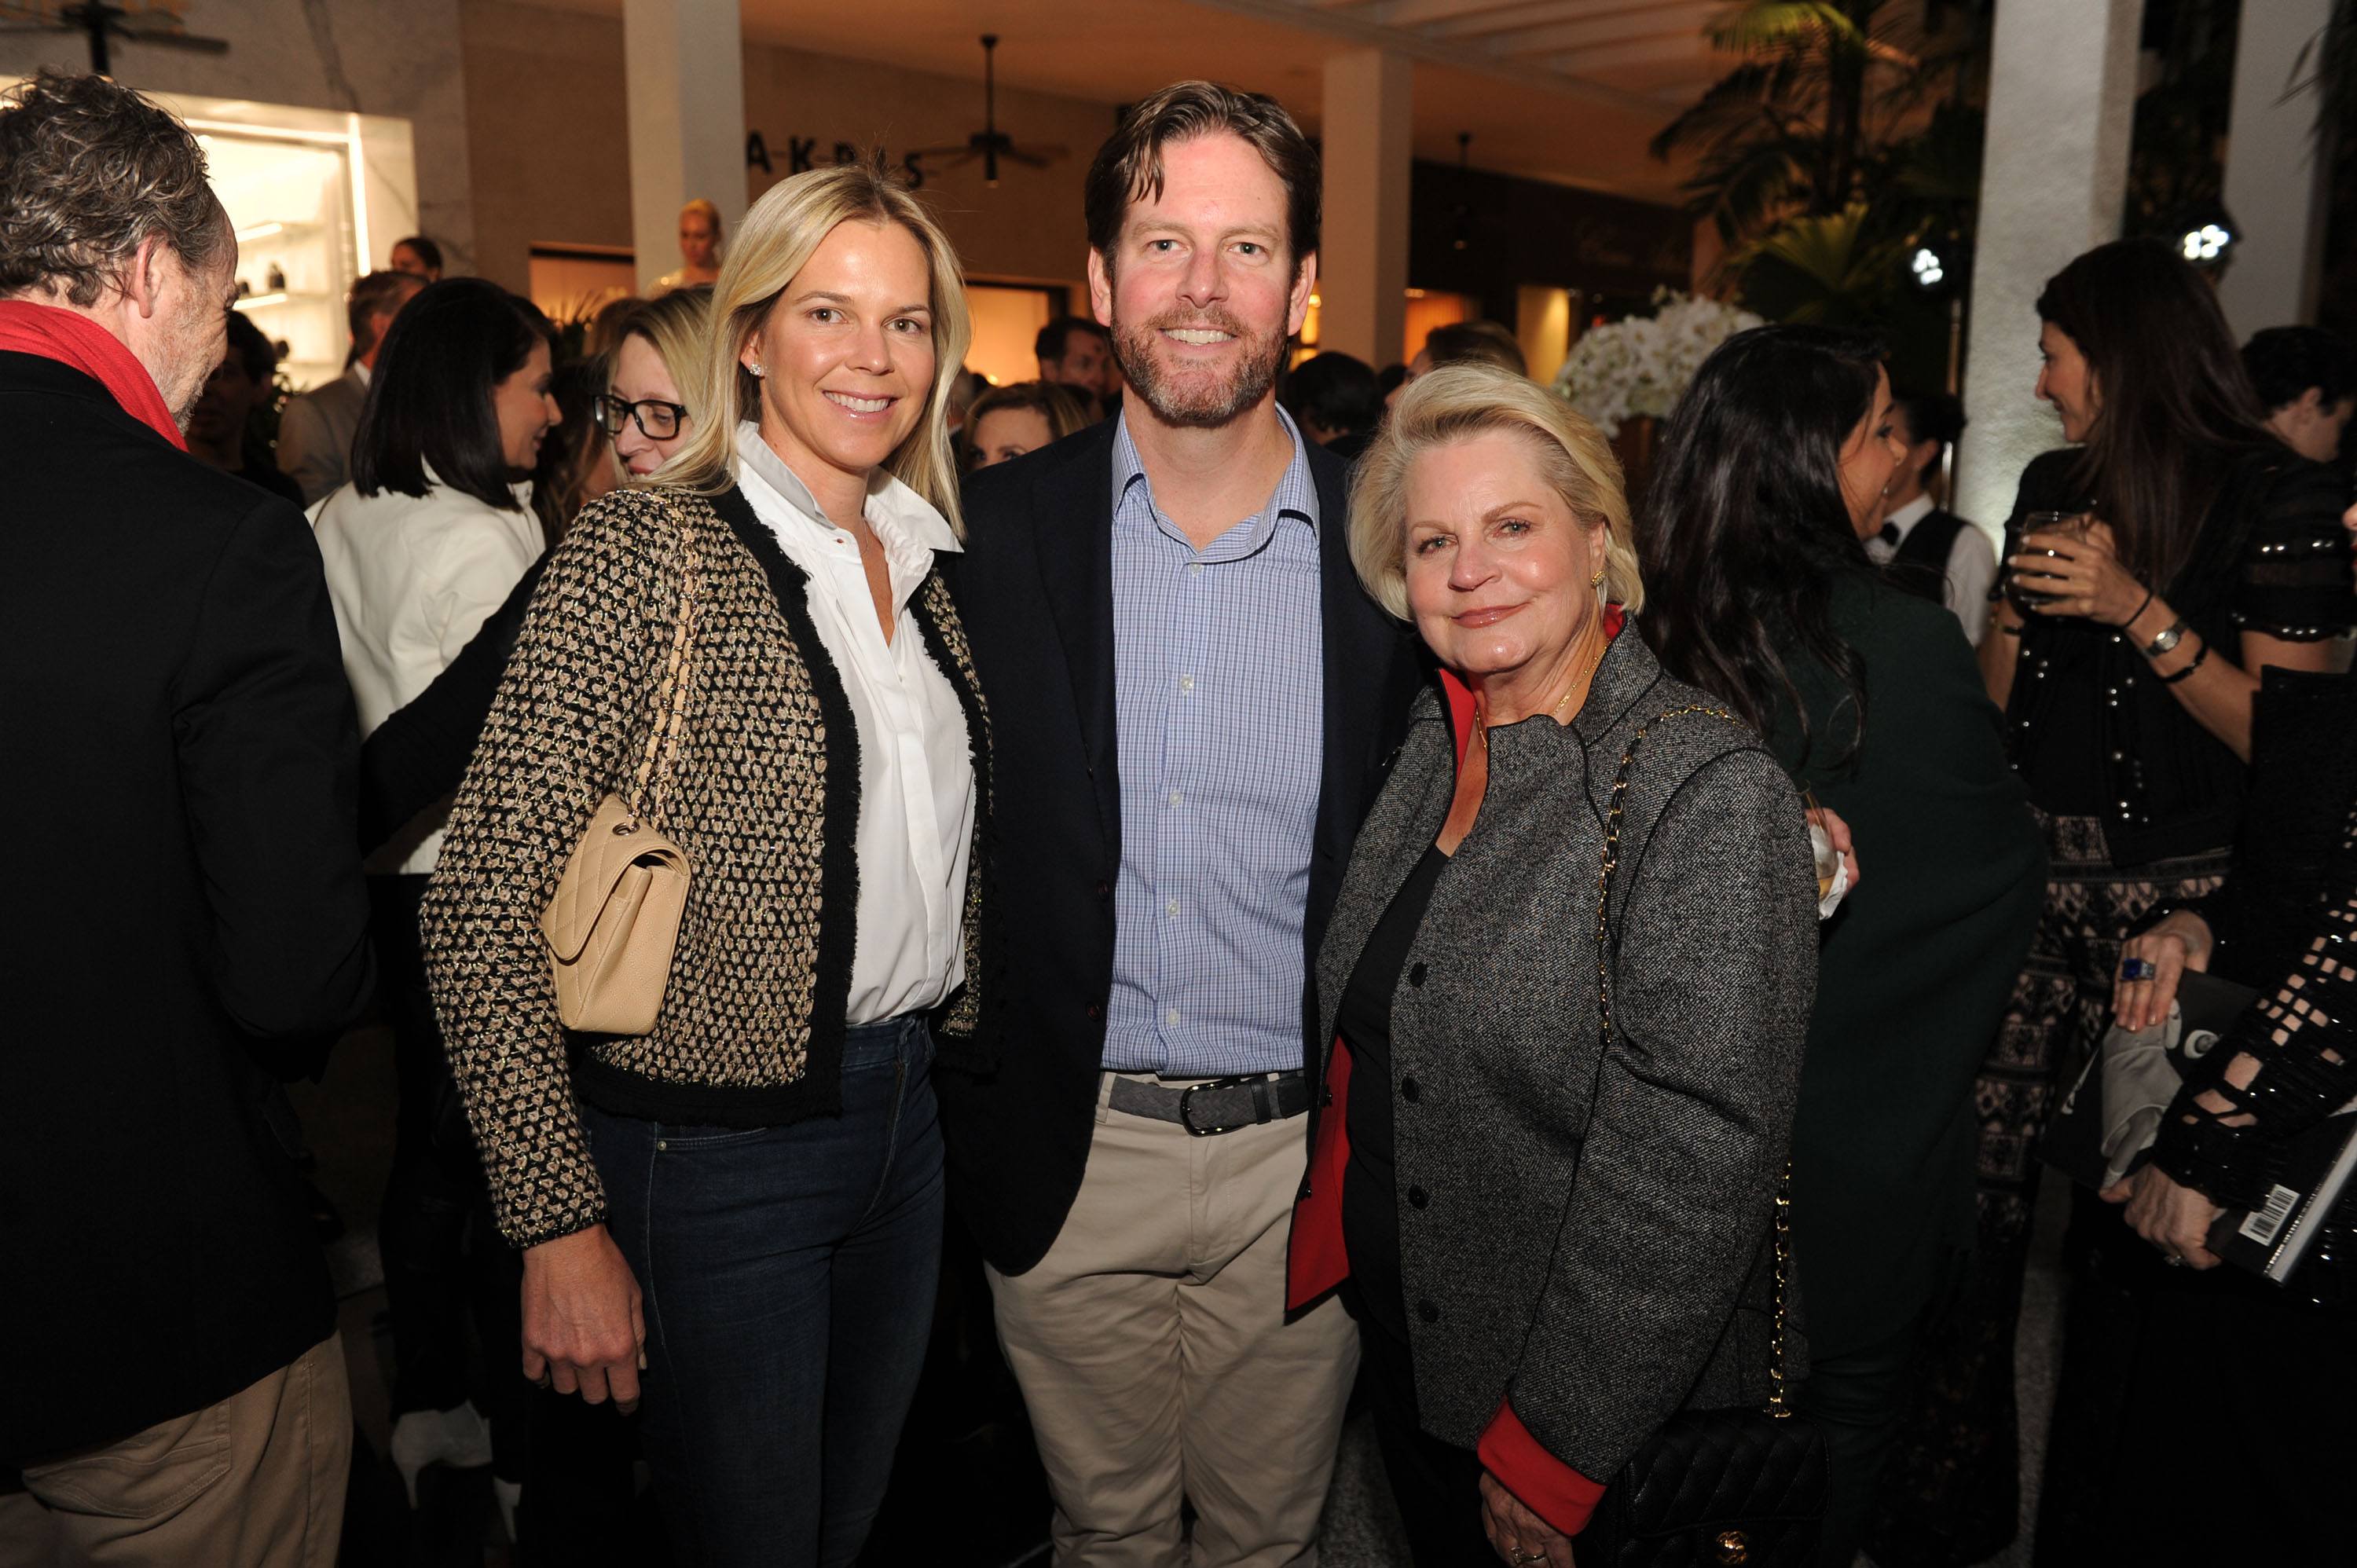 Matthew Whitman Lazenby with his wife Kristin Lazenby and his mother Gwen Lazenby